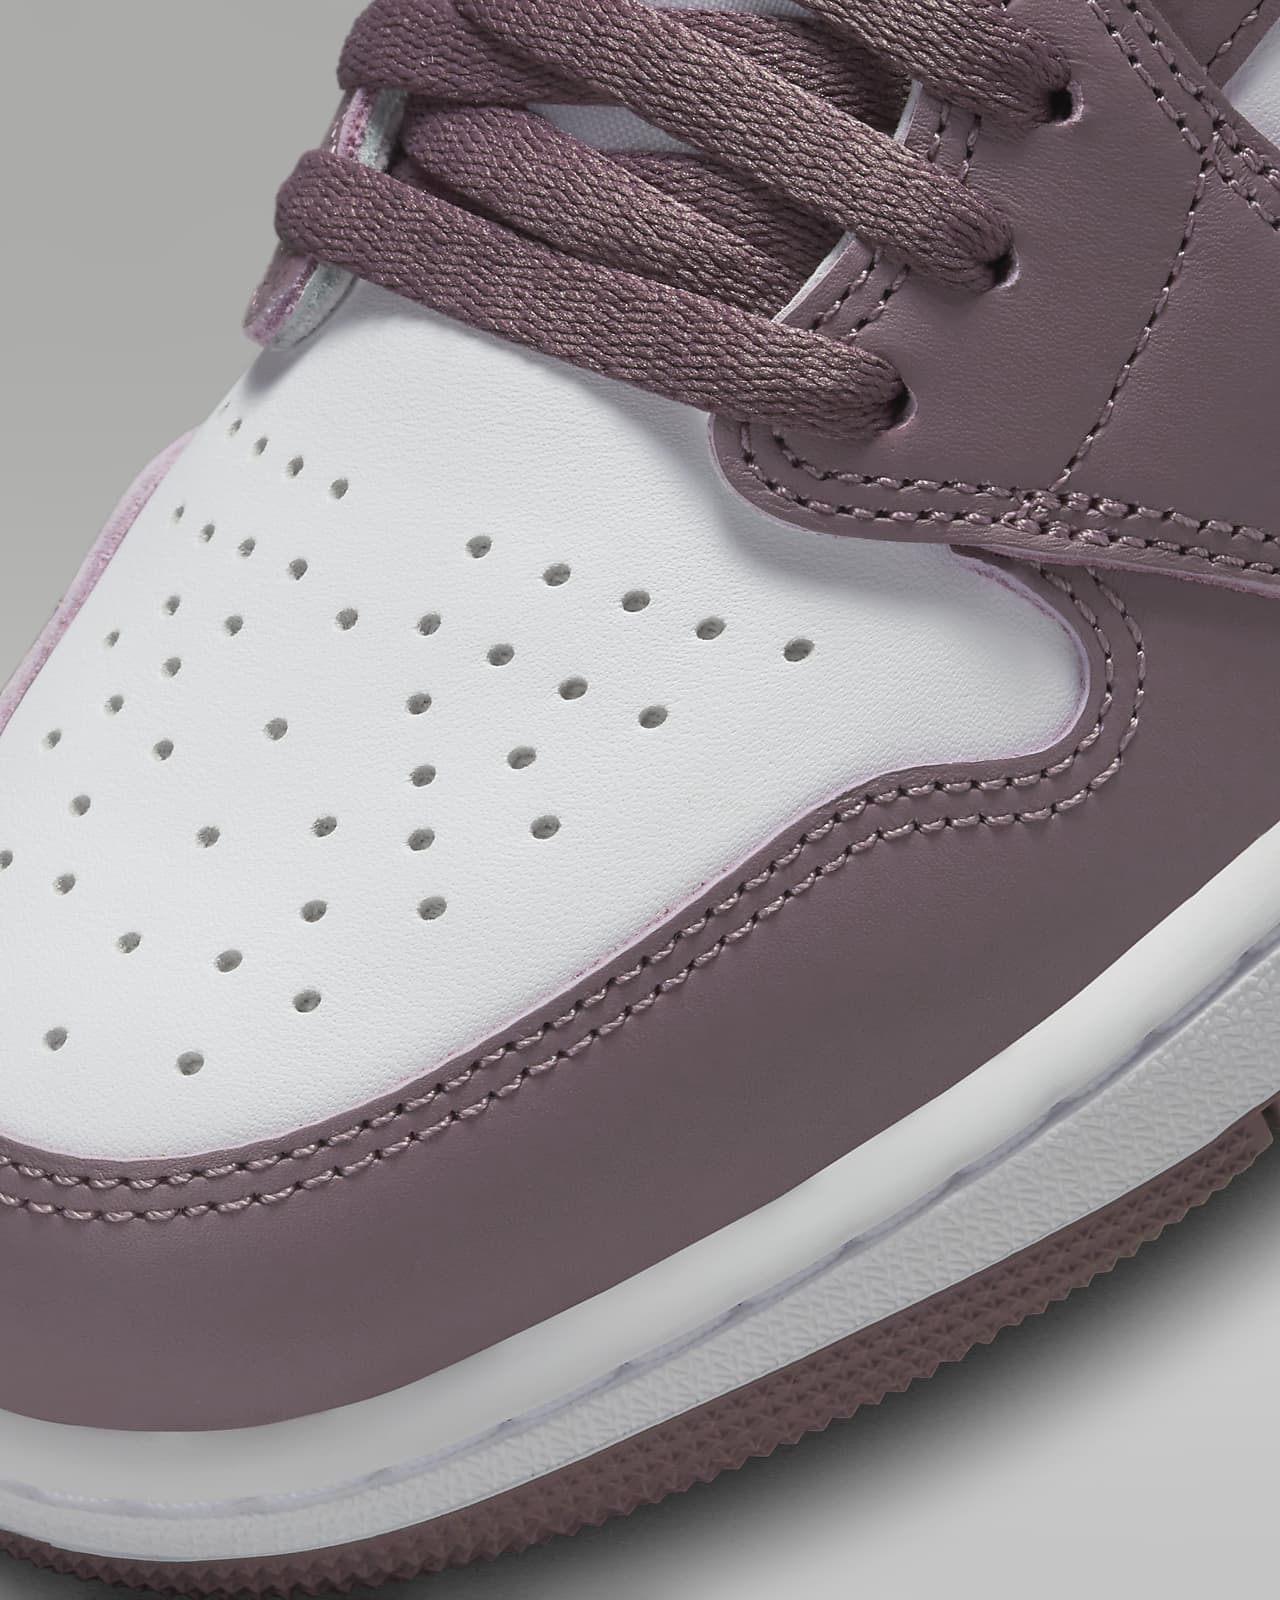 Air Jordan 1 High OG "Mauve" Men's Shoes. Nike.com